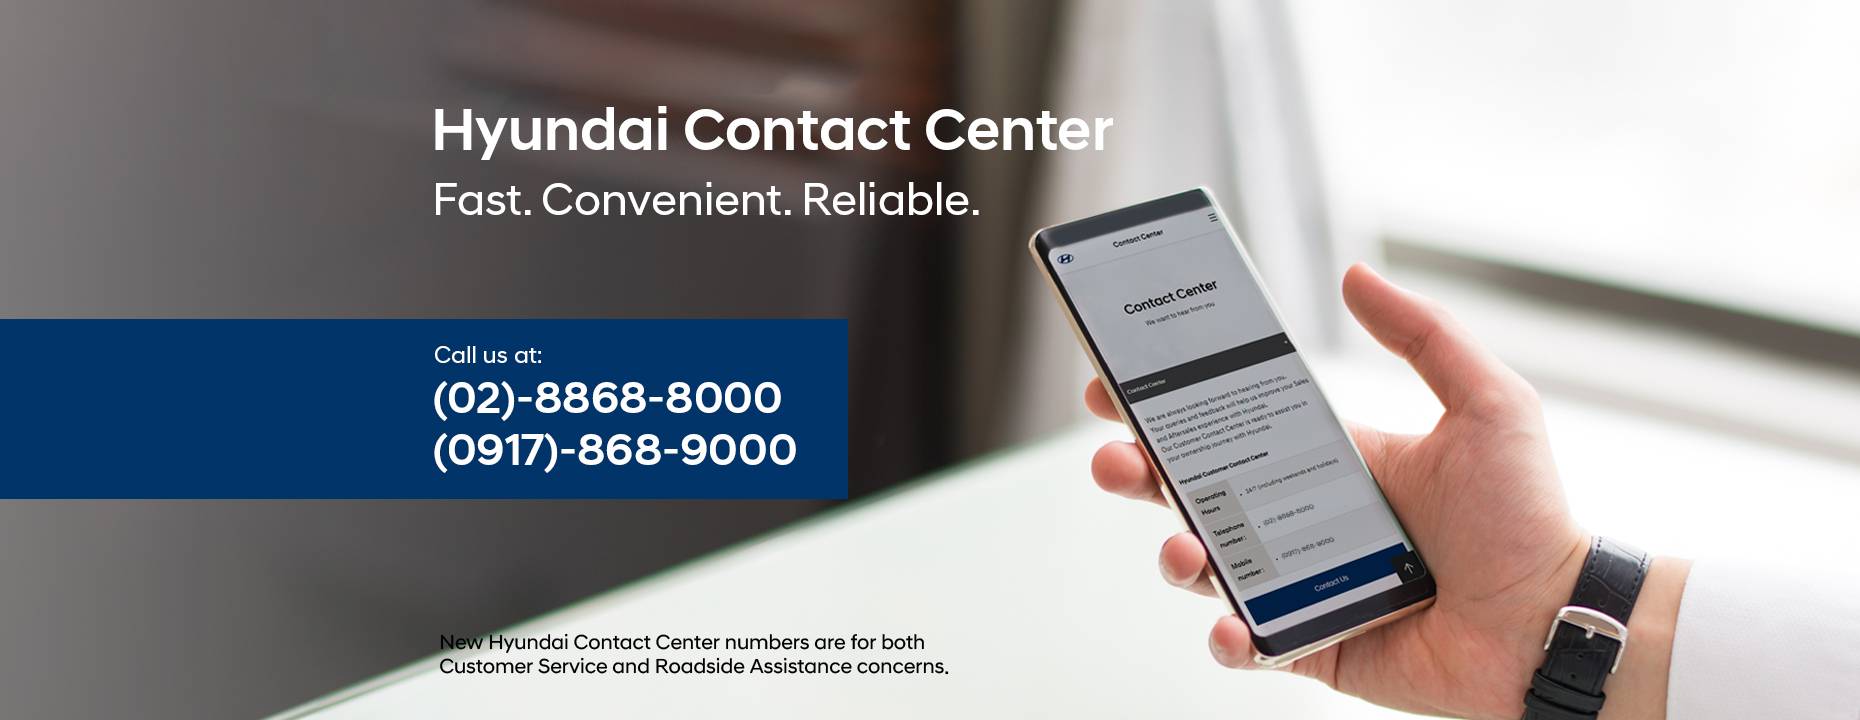 Hyundai Contact Center homebanner image